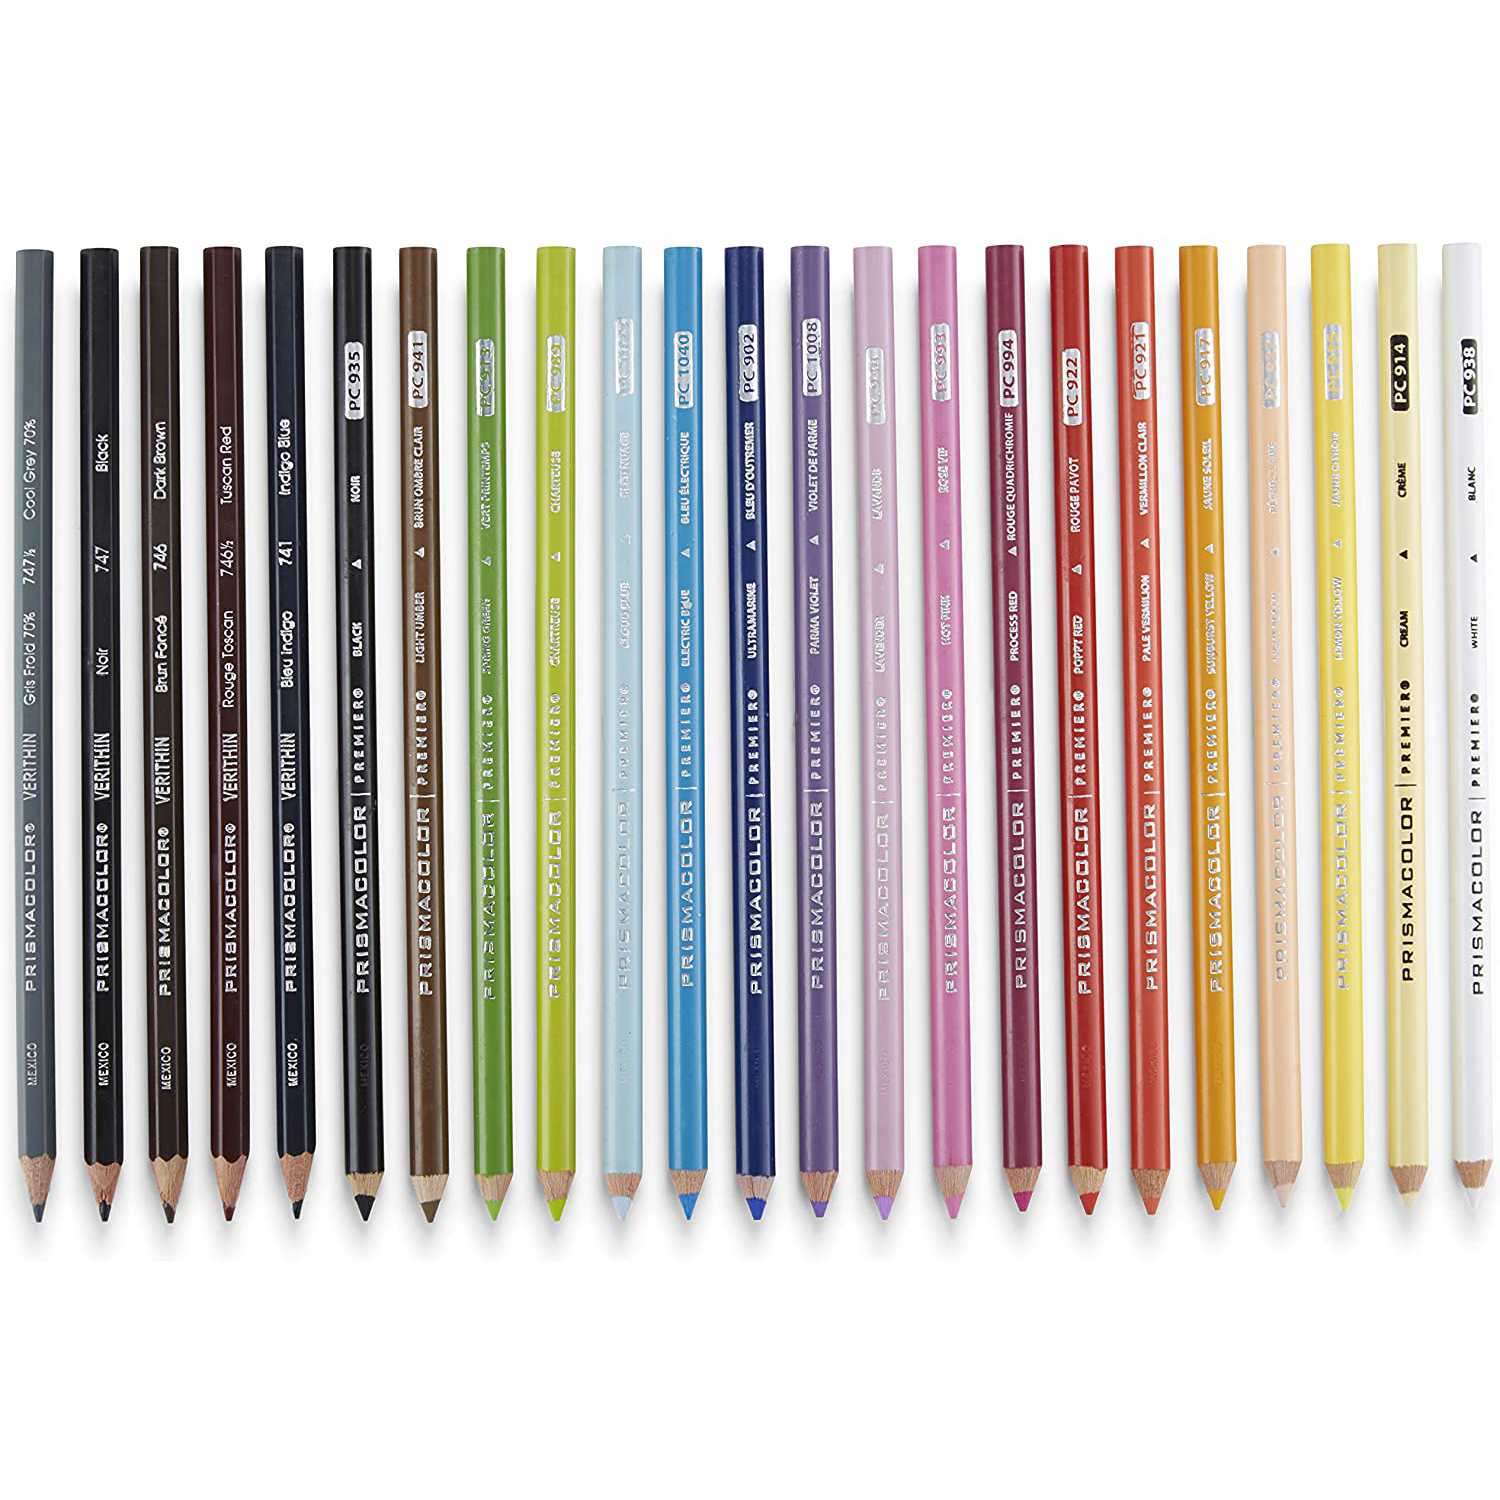 PC1774800 Manga 23pc Set Pencils Only